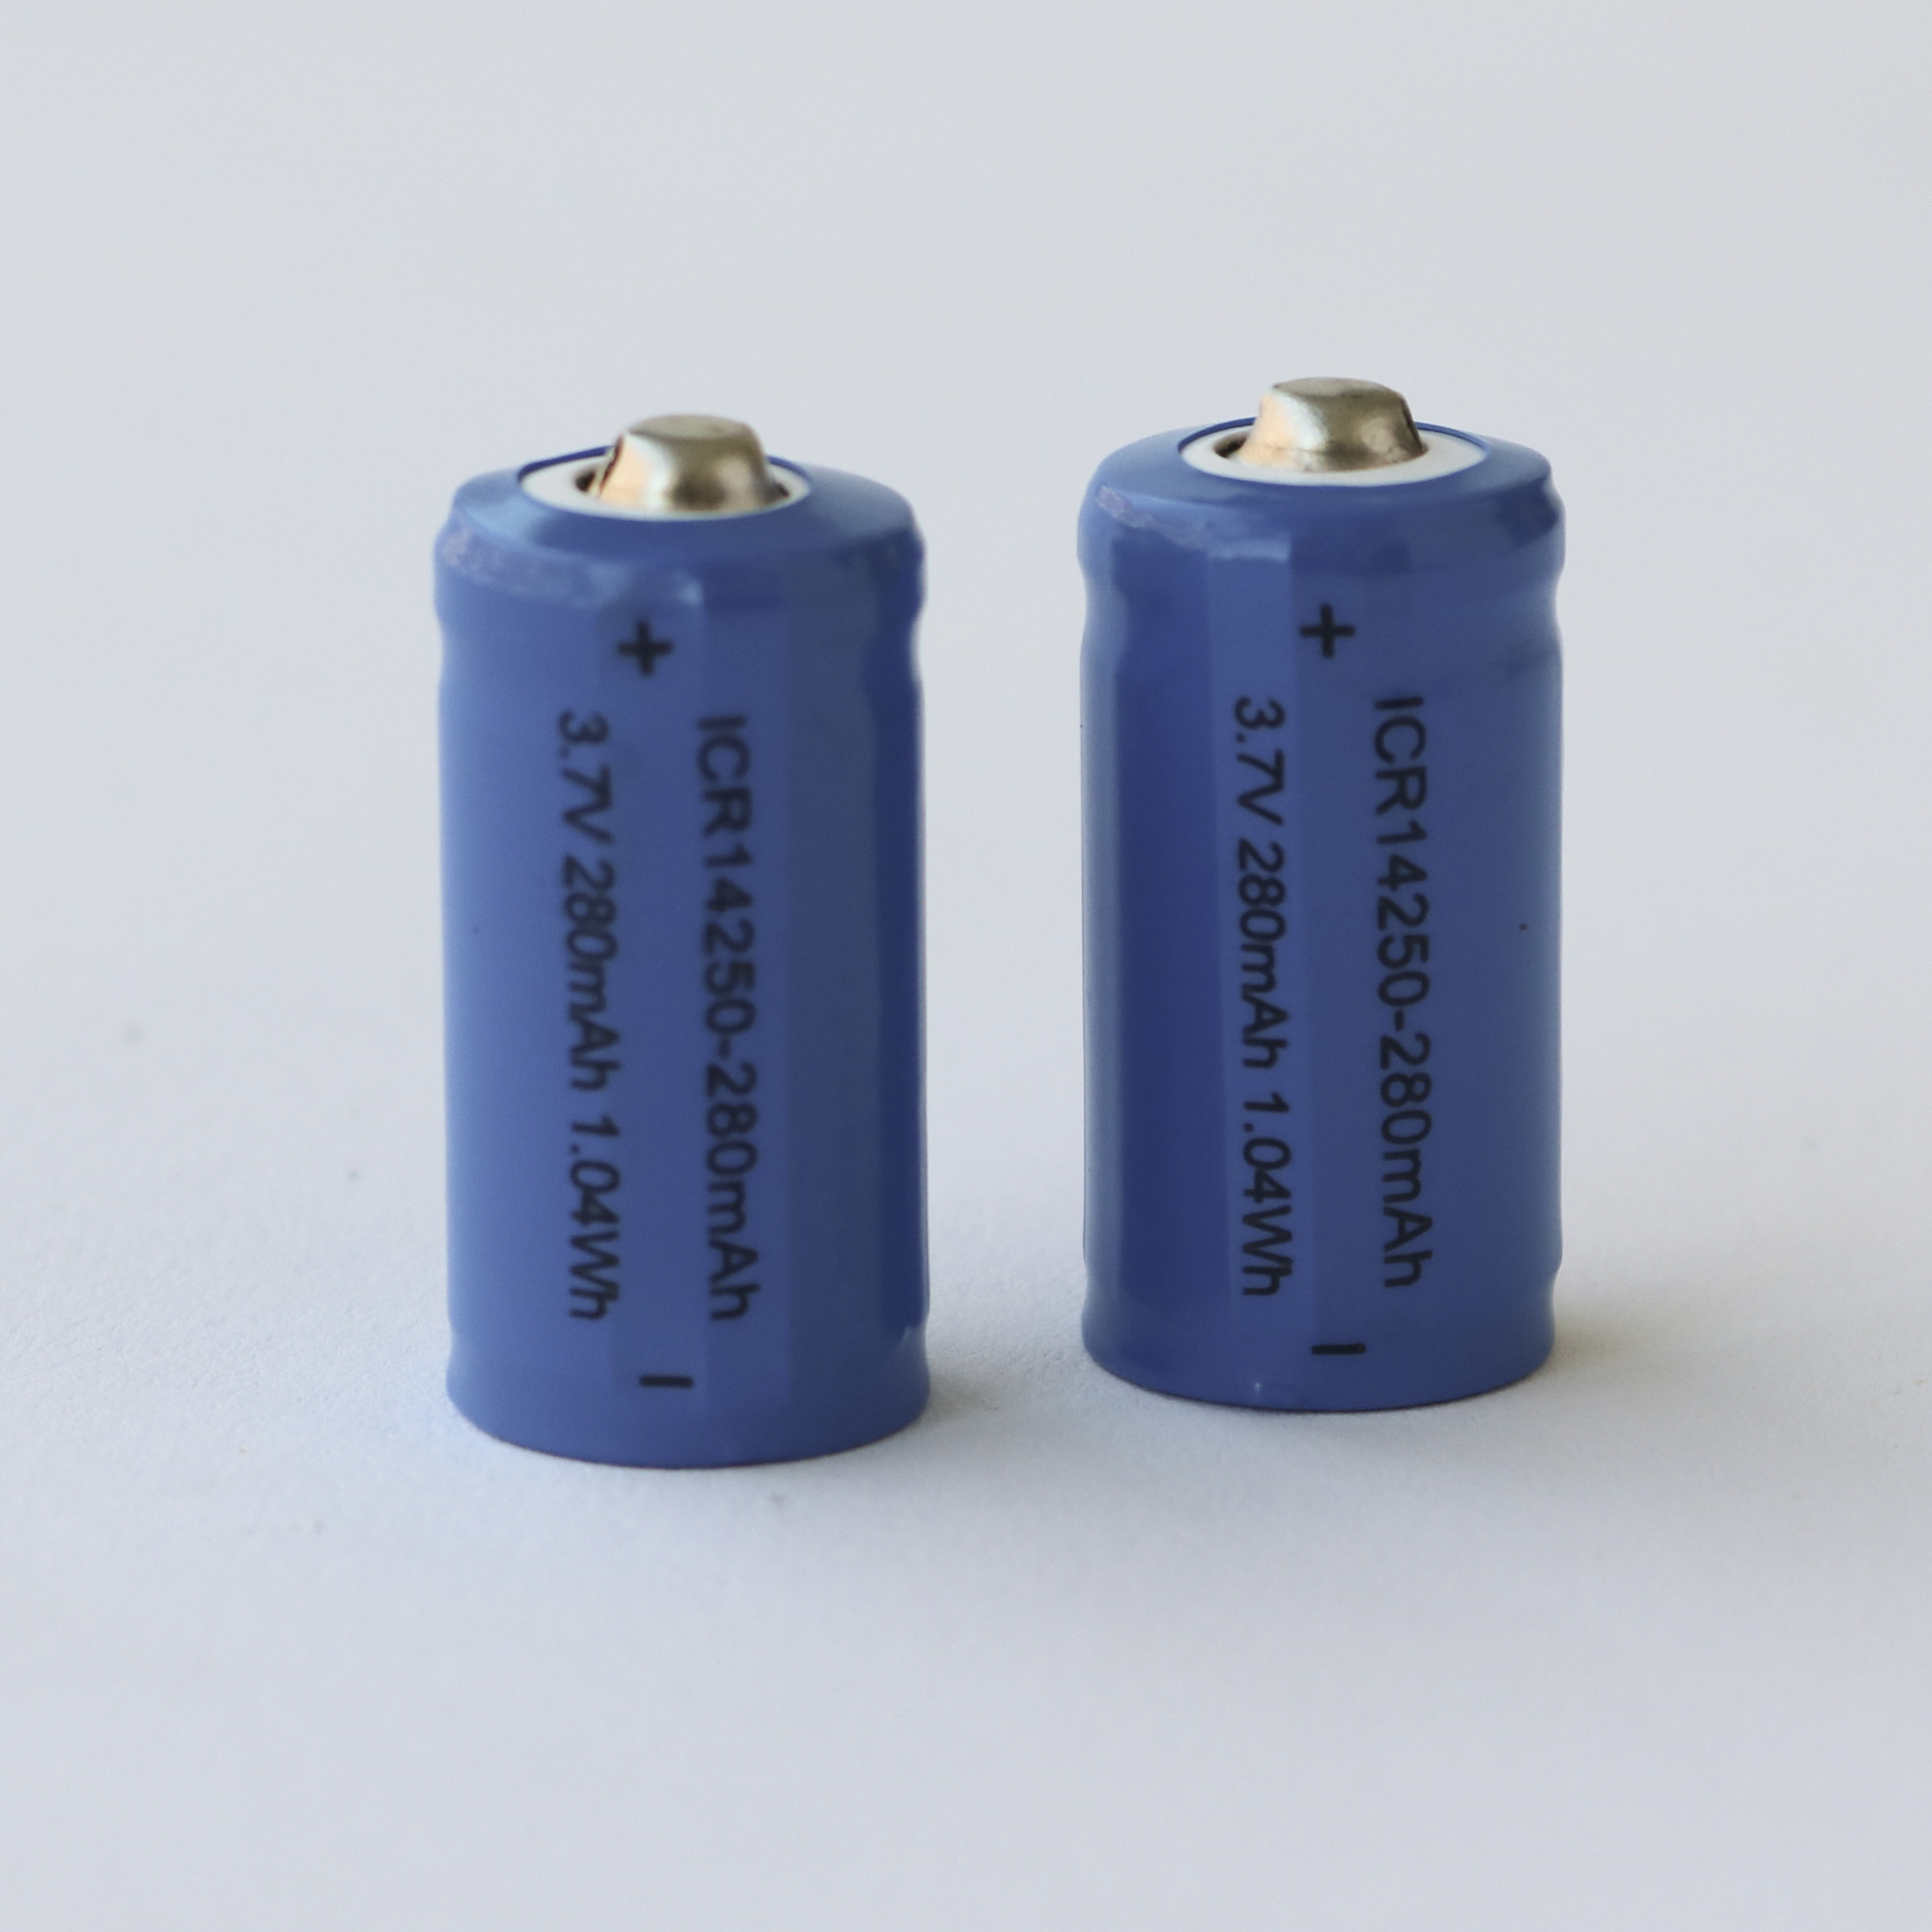 Batteriepolfett 100g E-COLL